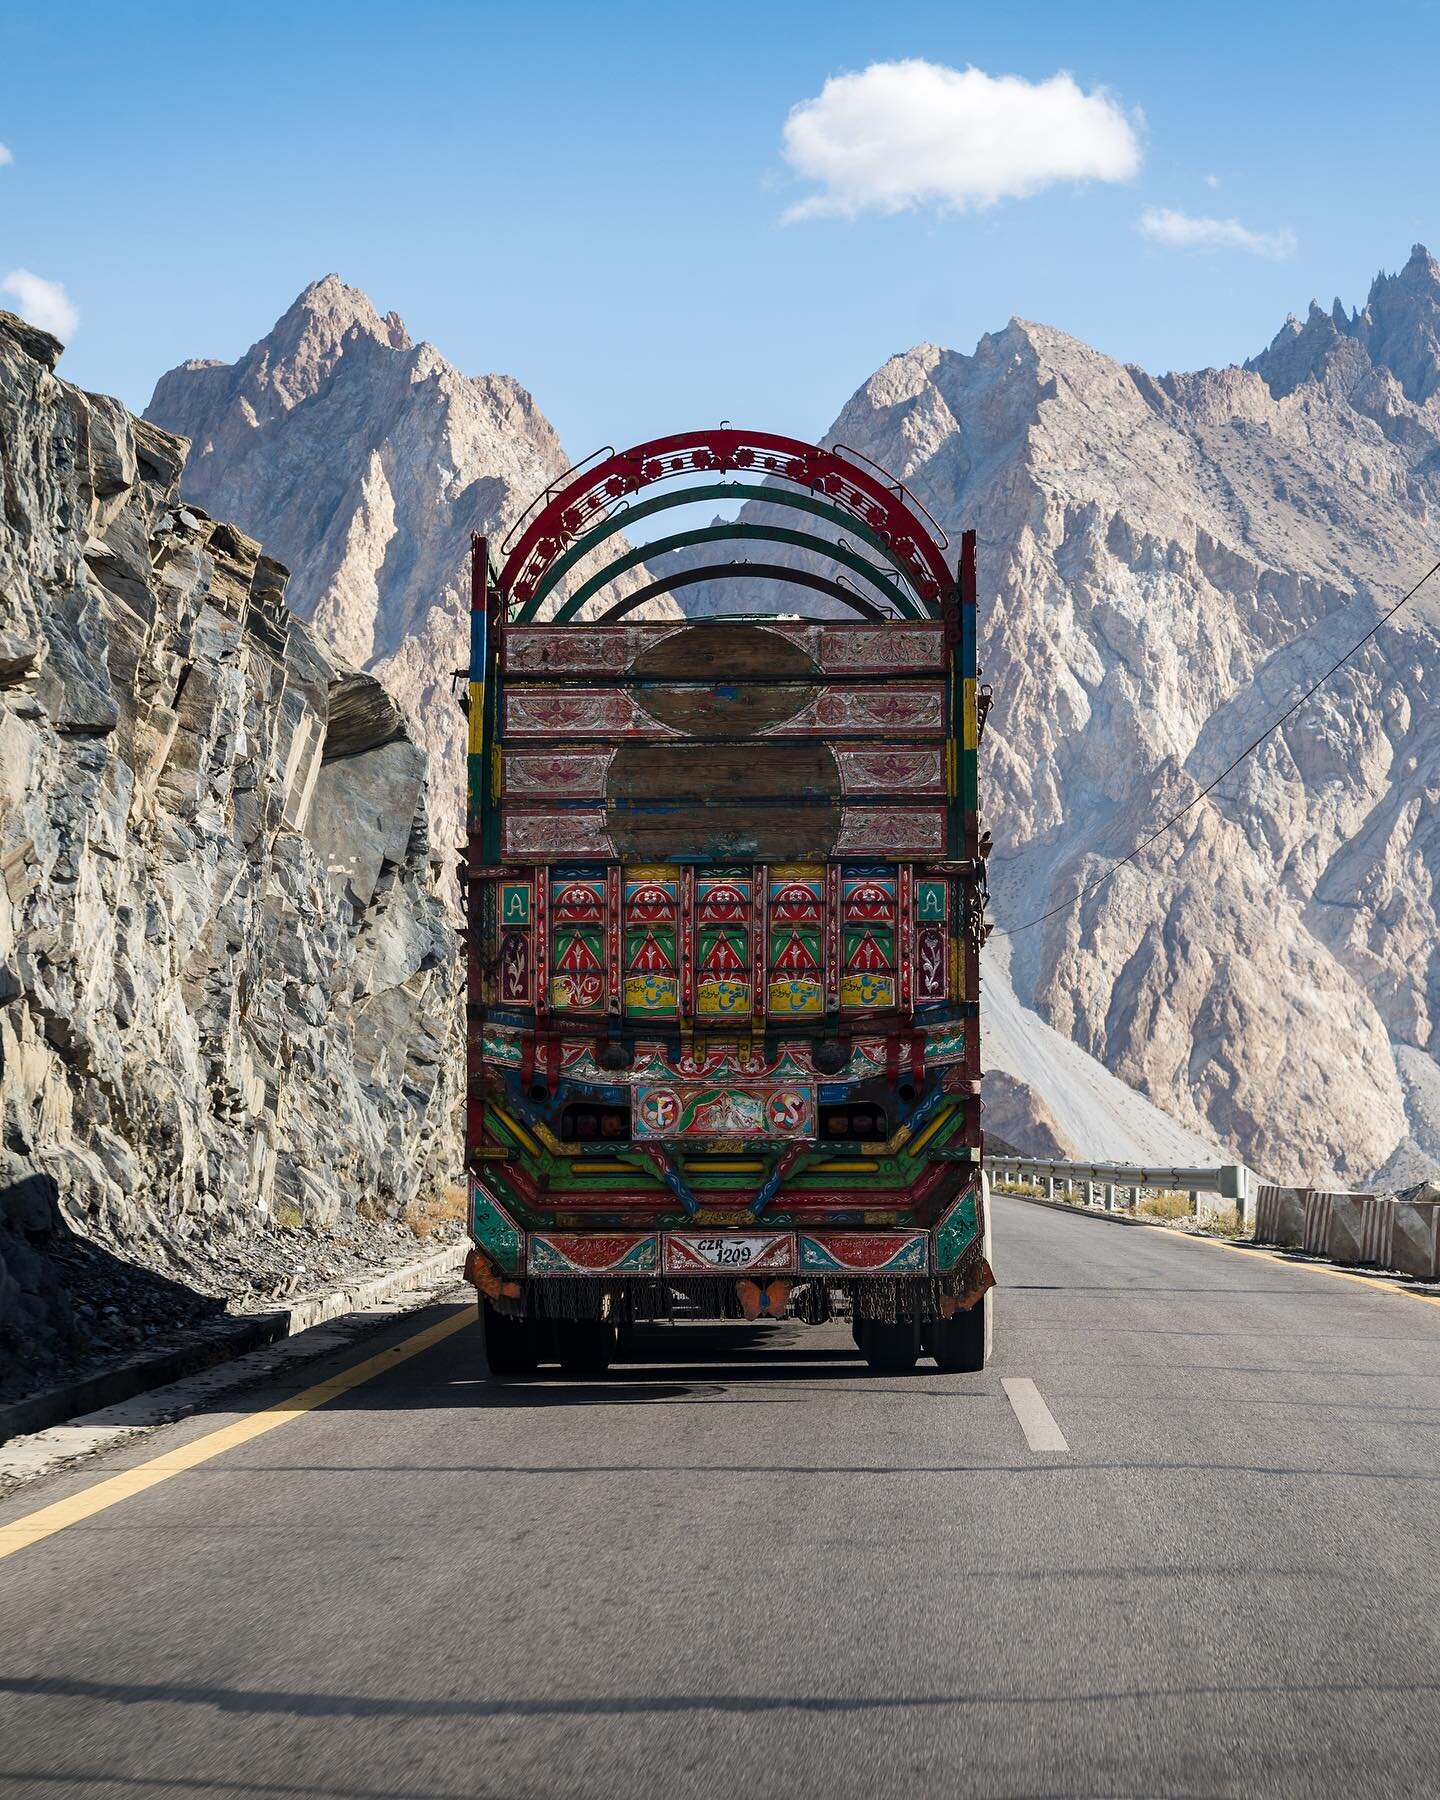 Road to the Pakistan-China border
&mdash;&mdash;&mdash;
#karakorumhighway #pakistan  #KKH #bbctravel #magazinegeo #karakorum #mountains #ontheroad #NGTUK #traveldeeper #worldnomads #liveintrepid #culturetrip #travelcultured #passionpassport #streetph